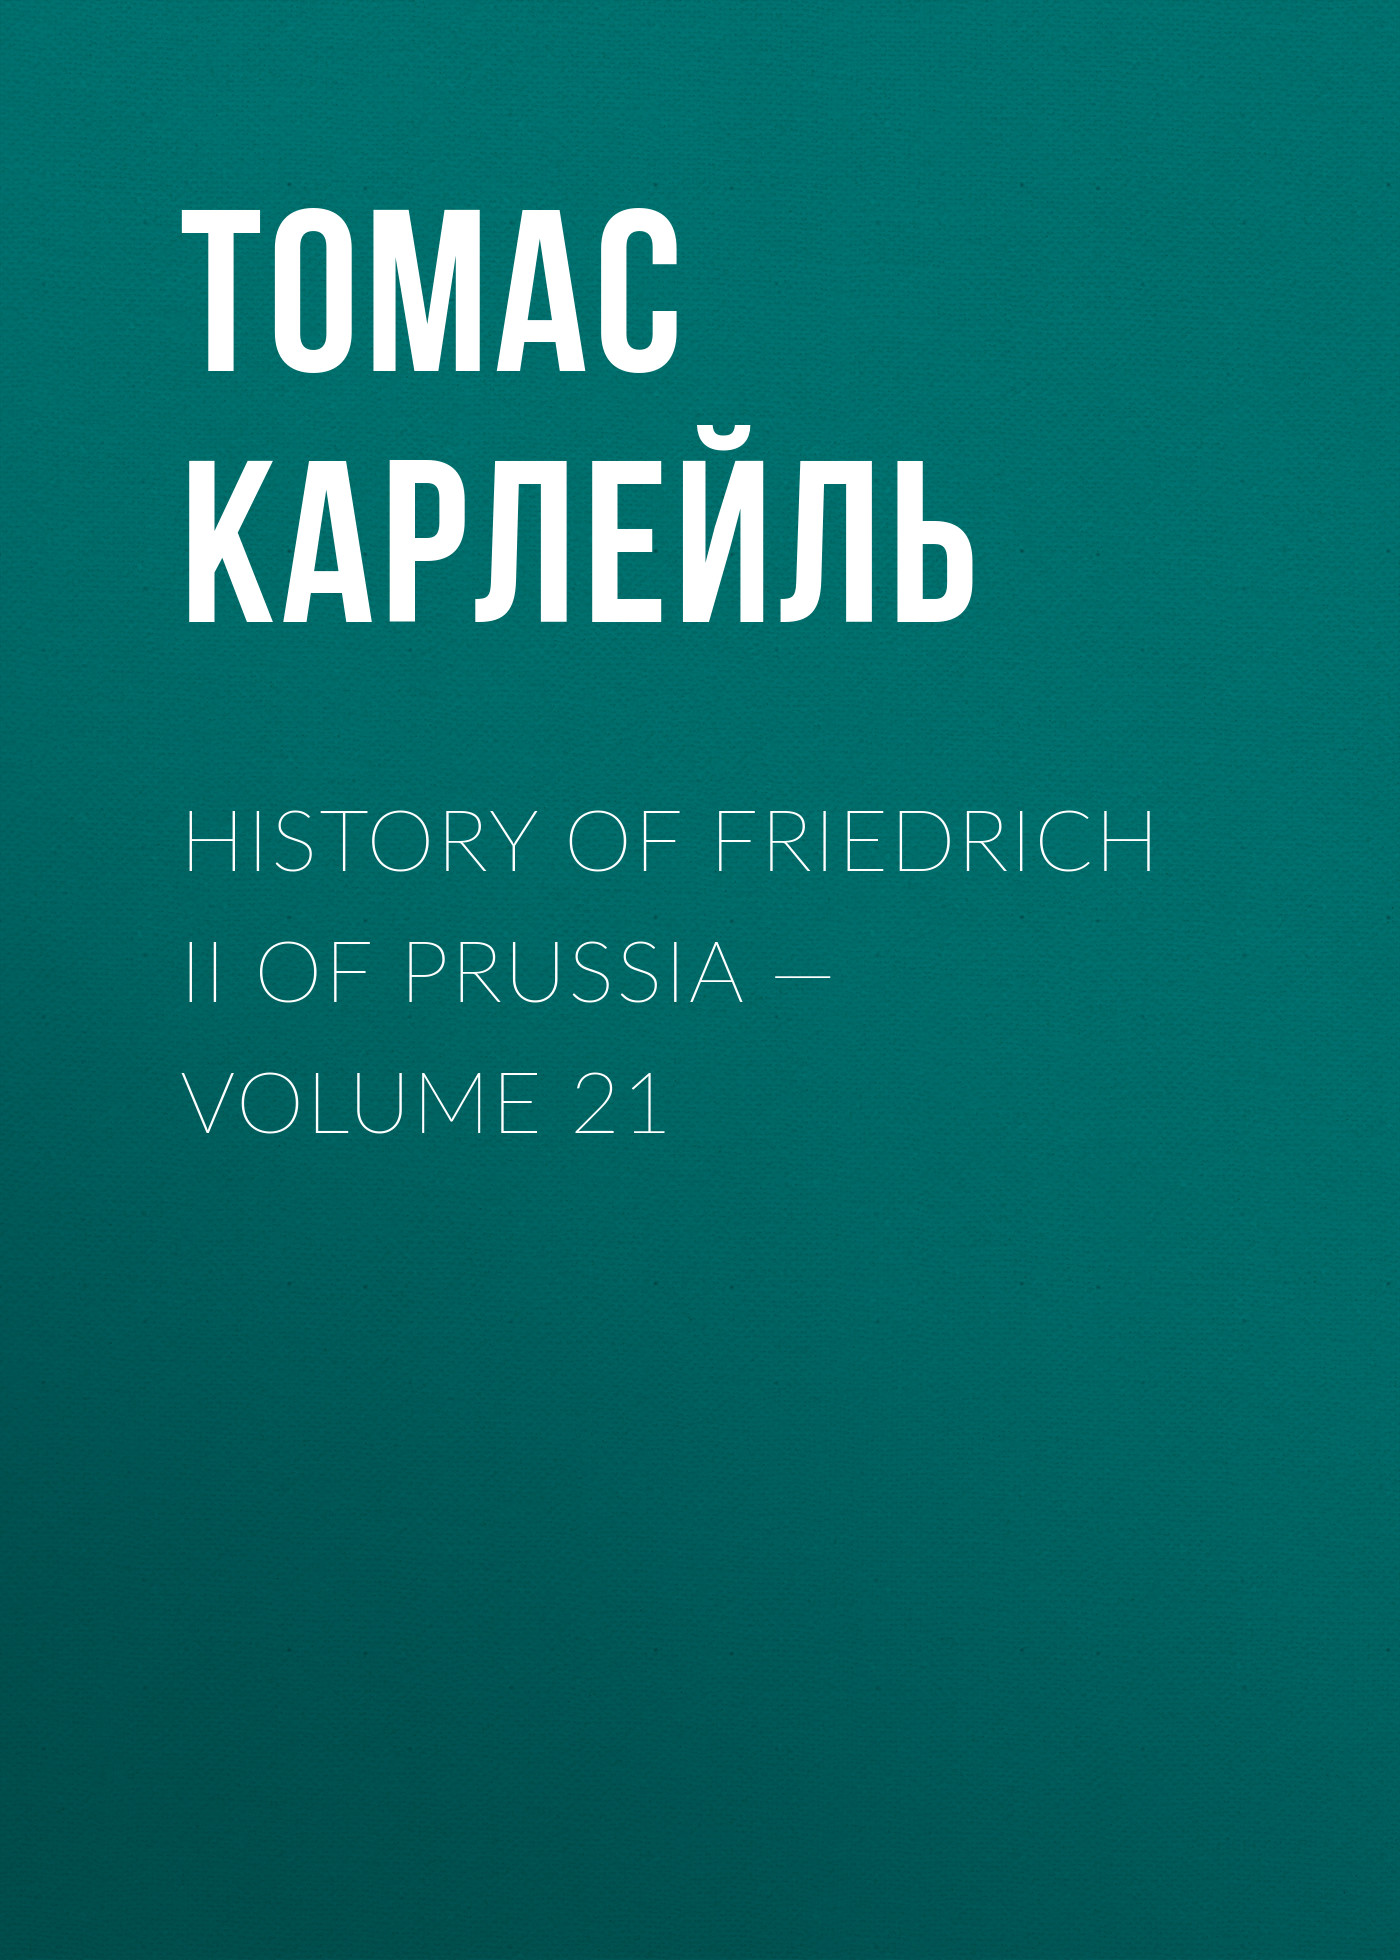 History of Friedrich II of Prussia— Volume 21